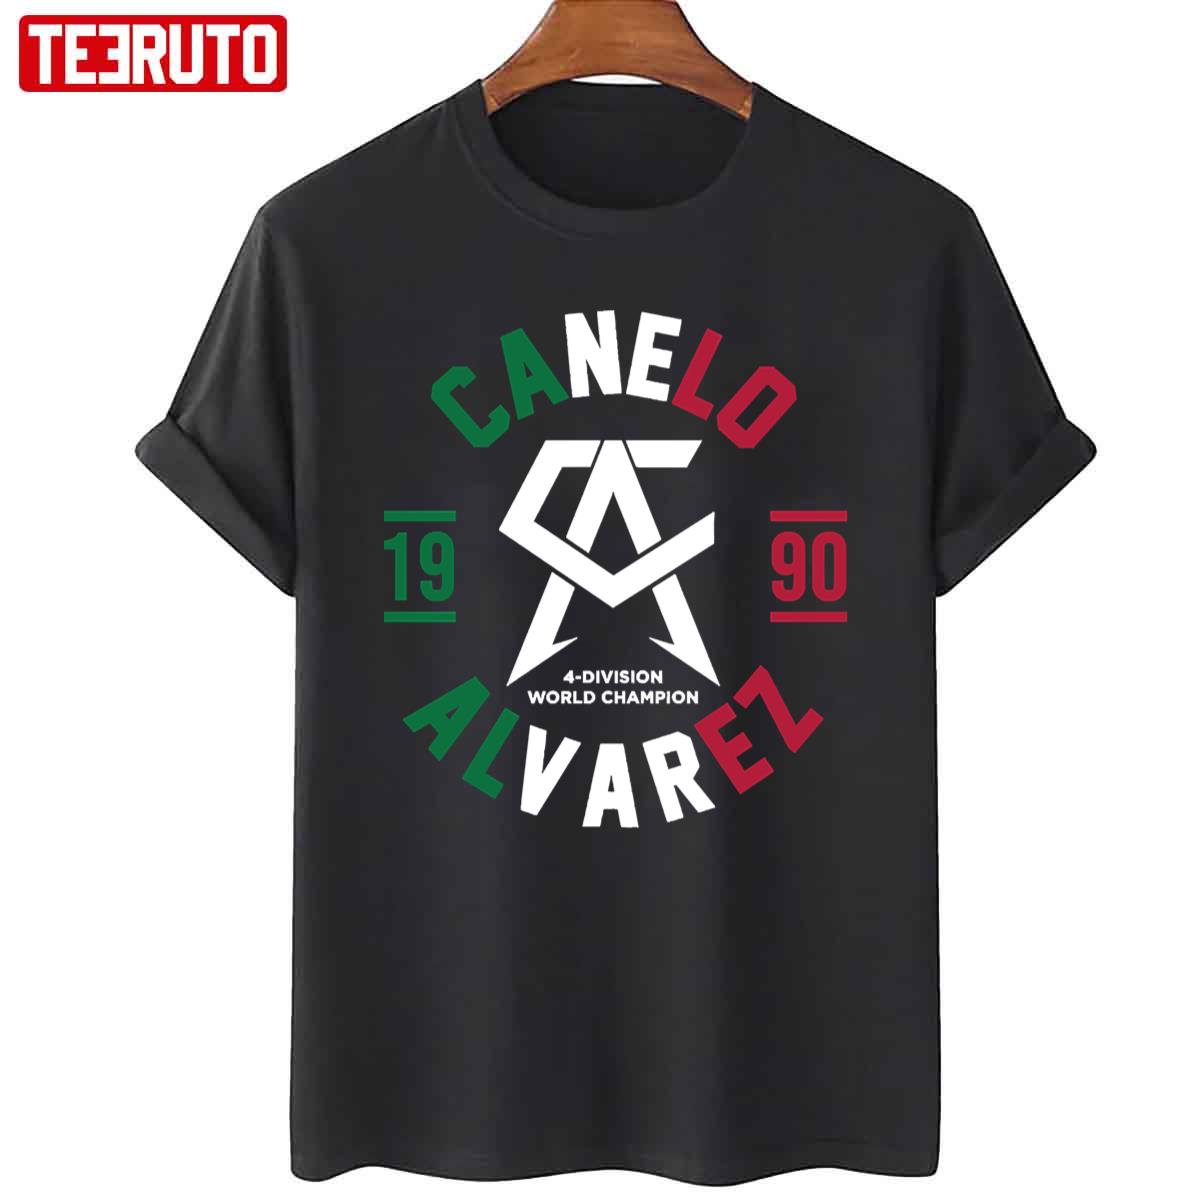 Canelo Alvarez 1990 Classic Unisex T-Shirt